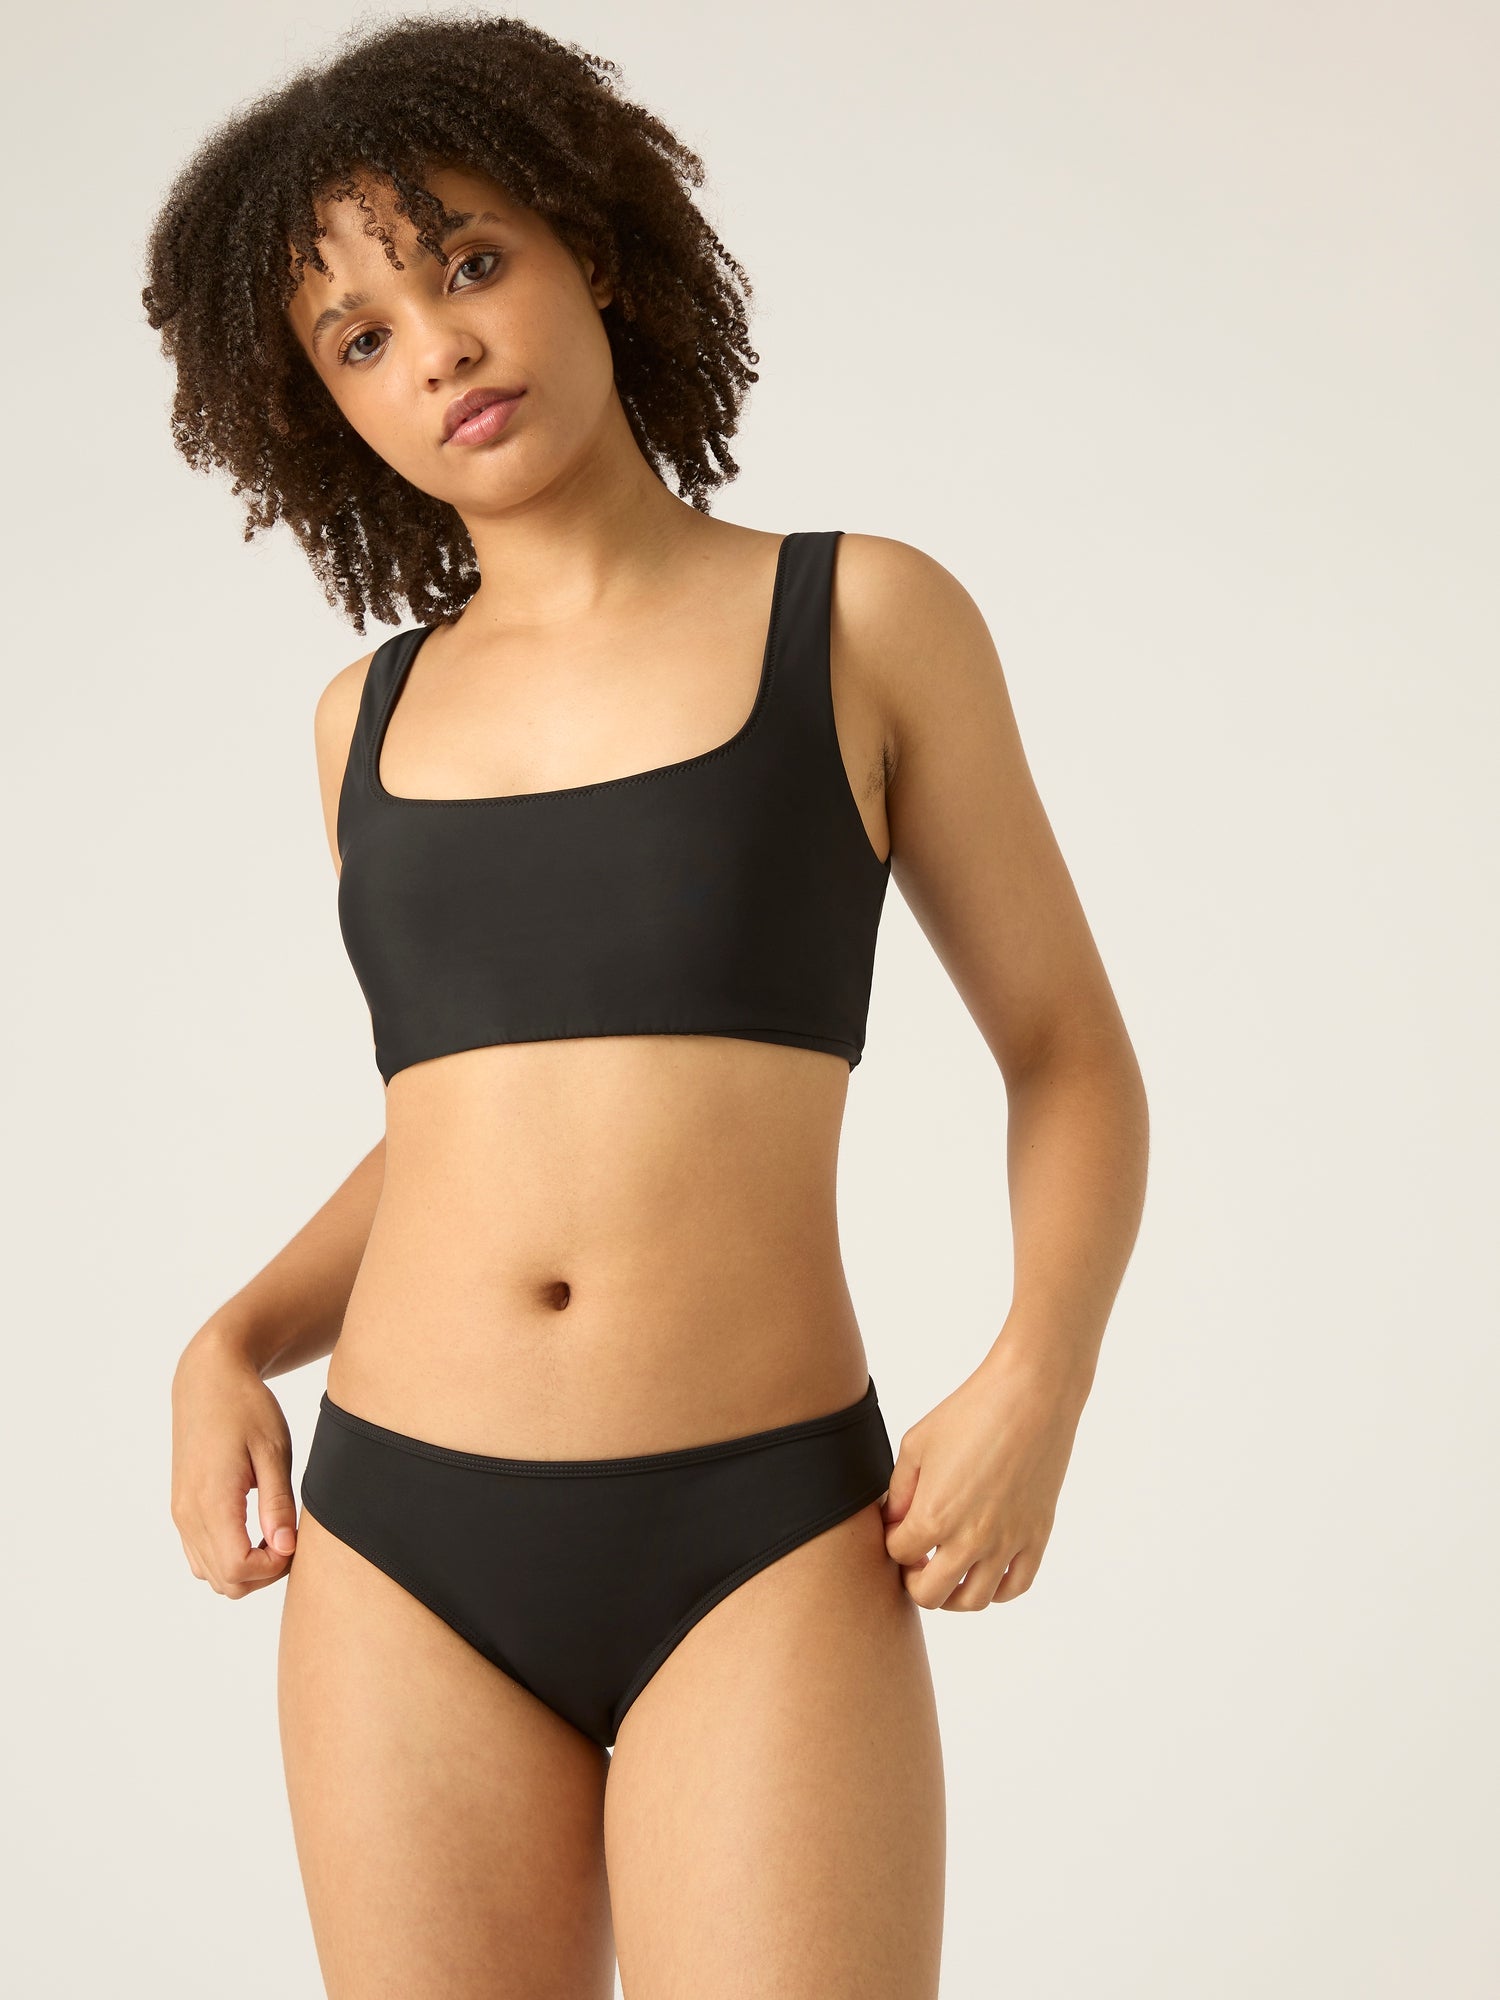 Black Teen Bikini Period Underwear - Heavy Flow XS